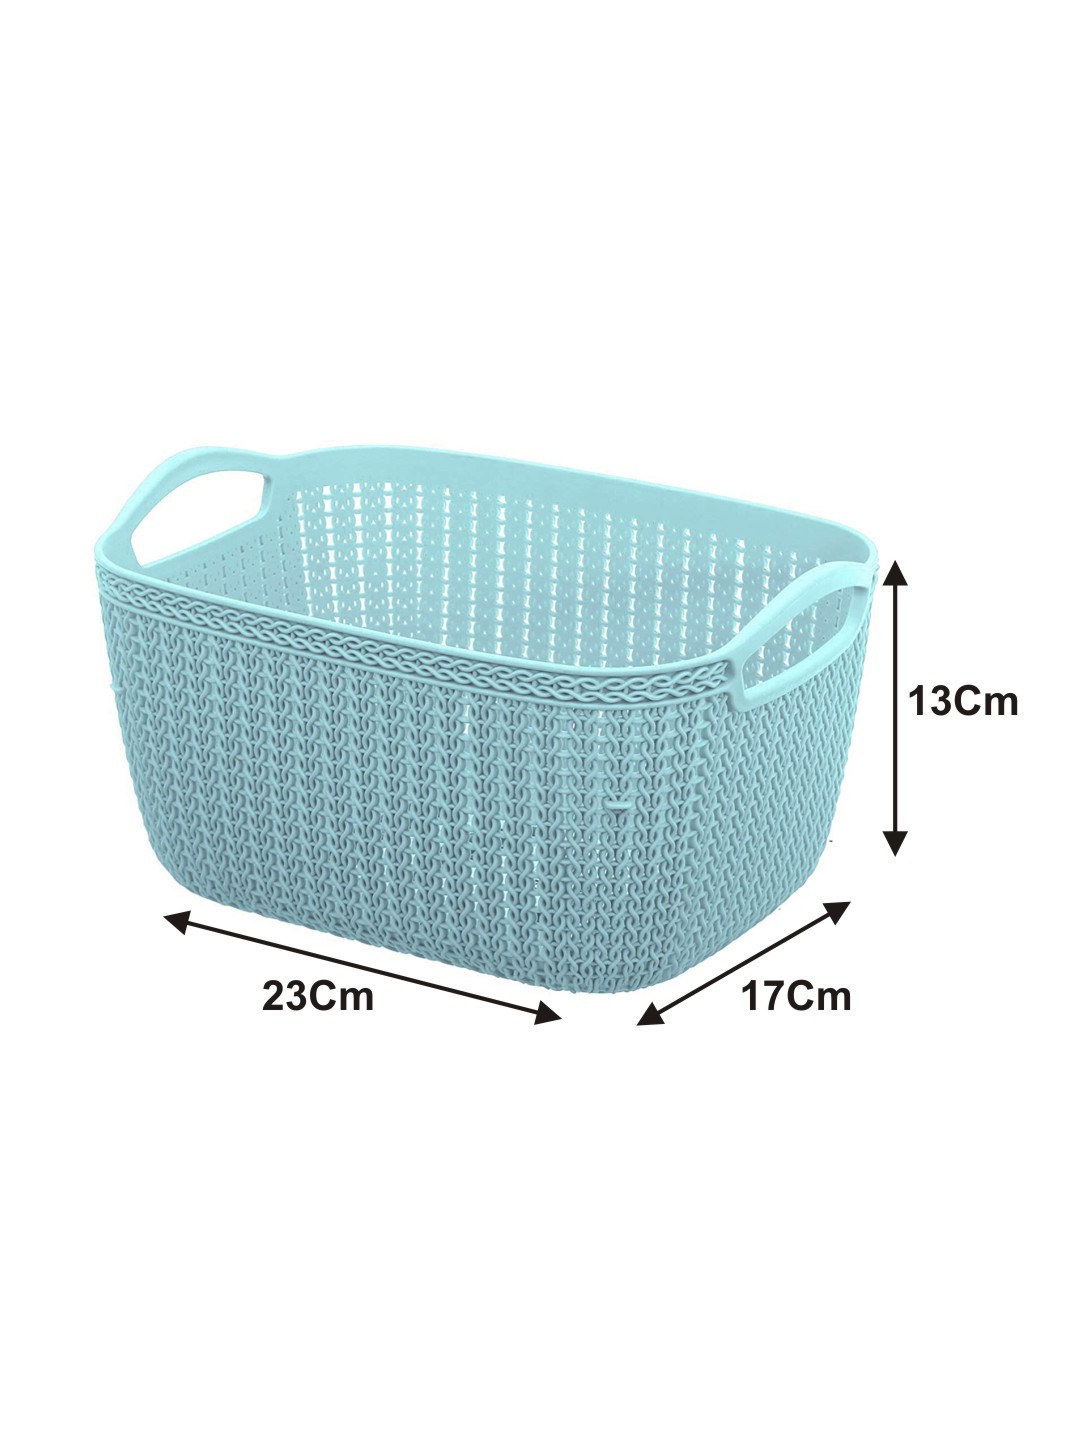 Kuber Industries Q-5 Unbreakable Plastic Multipurpose Medium Size Flexible Storage Baskets/Fruit Vegetable Bathroom Stationary Home Basket with Handles (Light Blue)